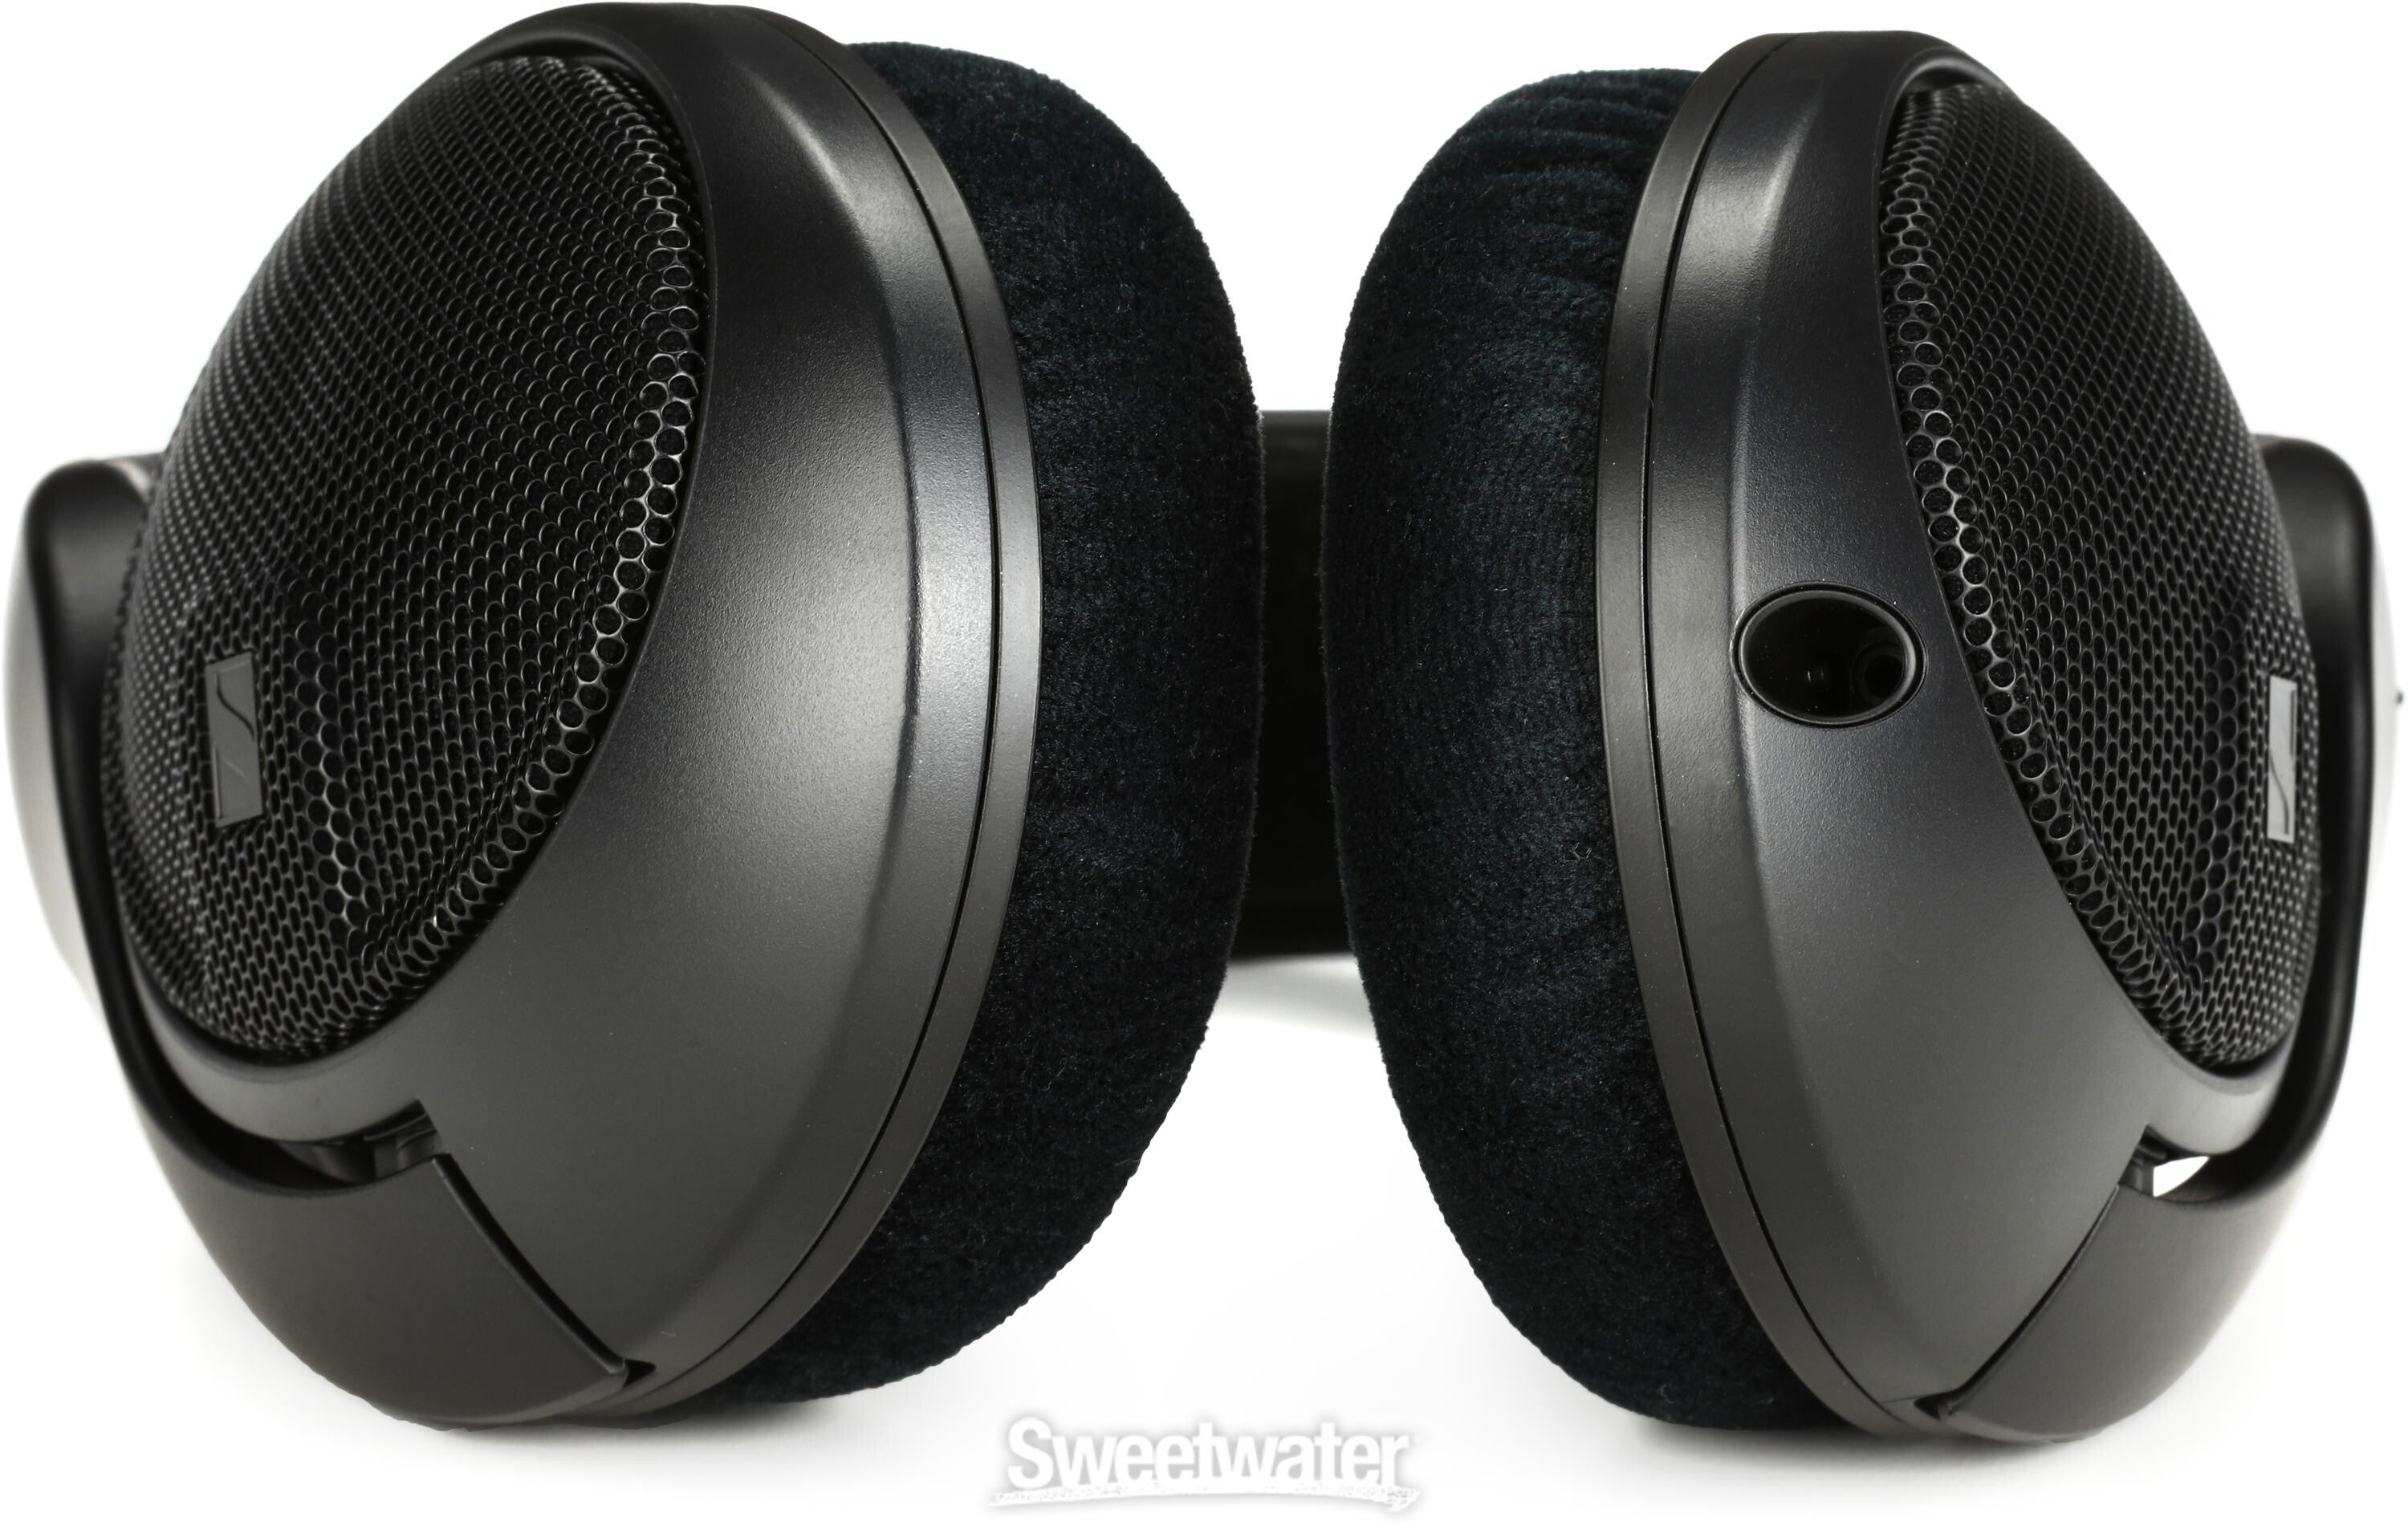 Sennheiser HD 400 Pro Reference Headphones